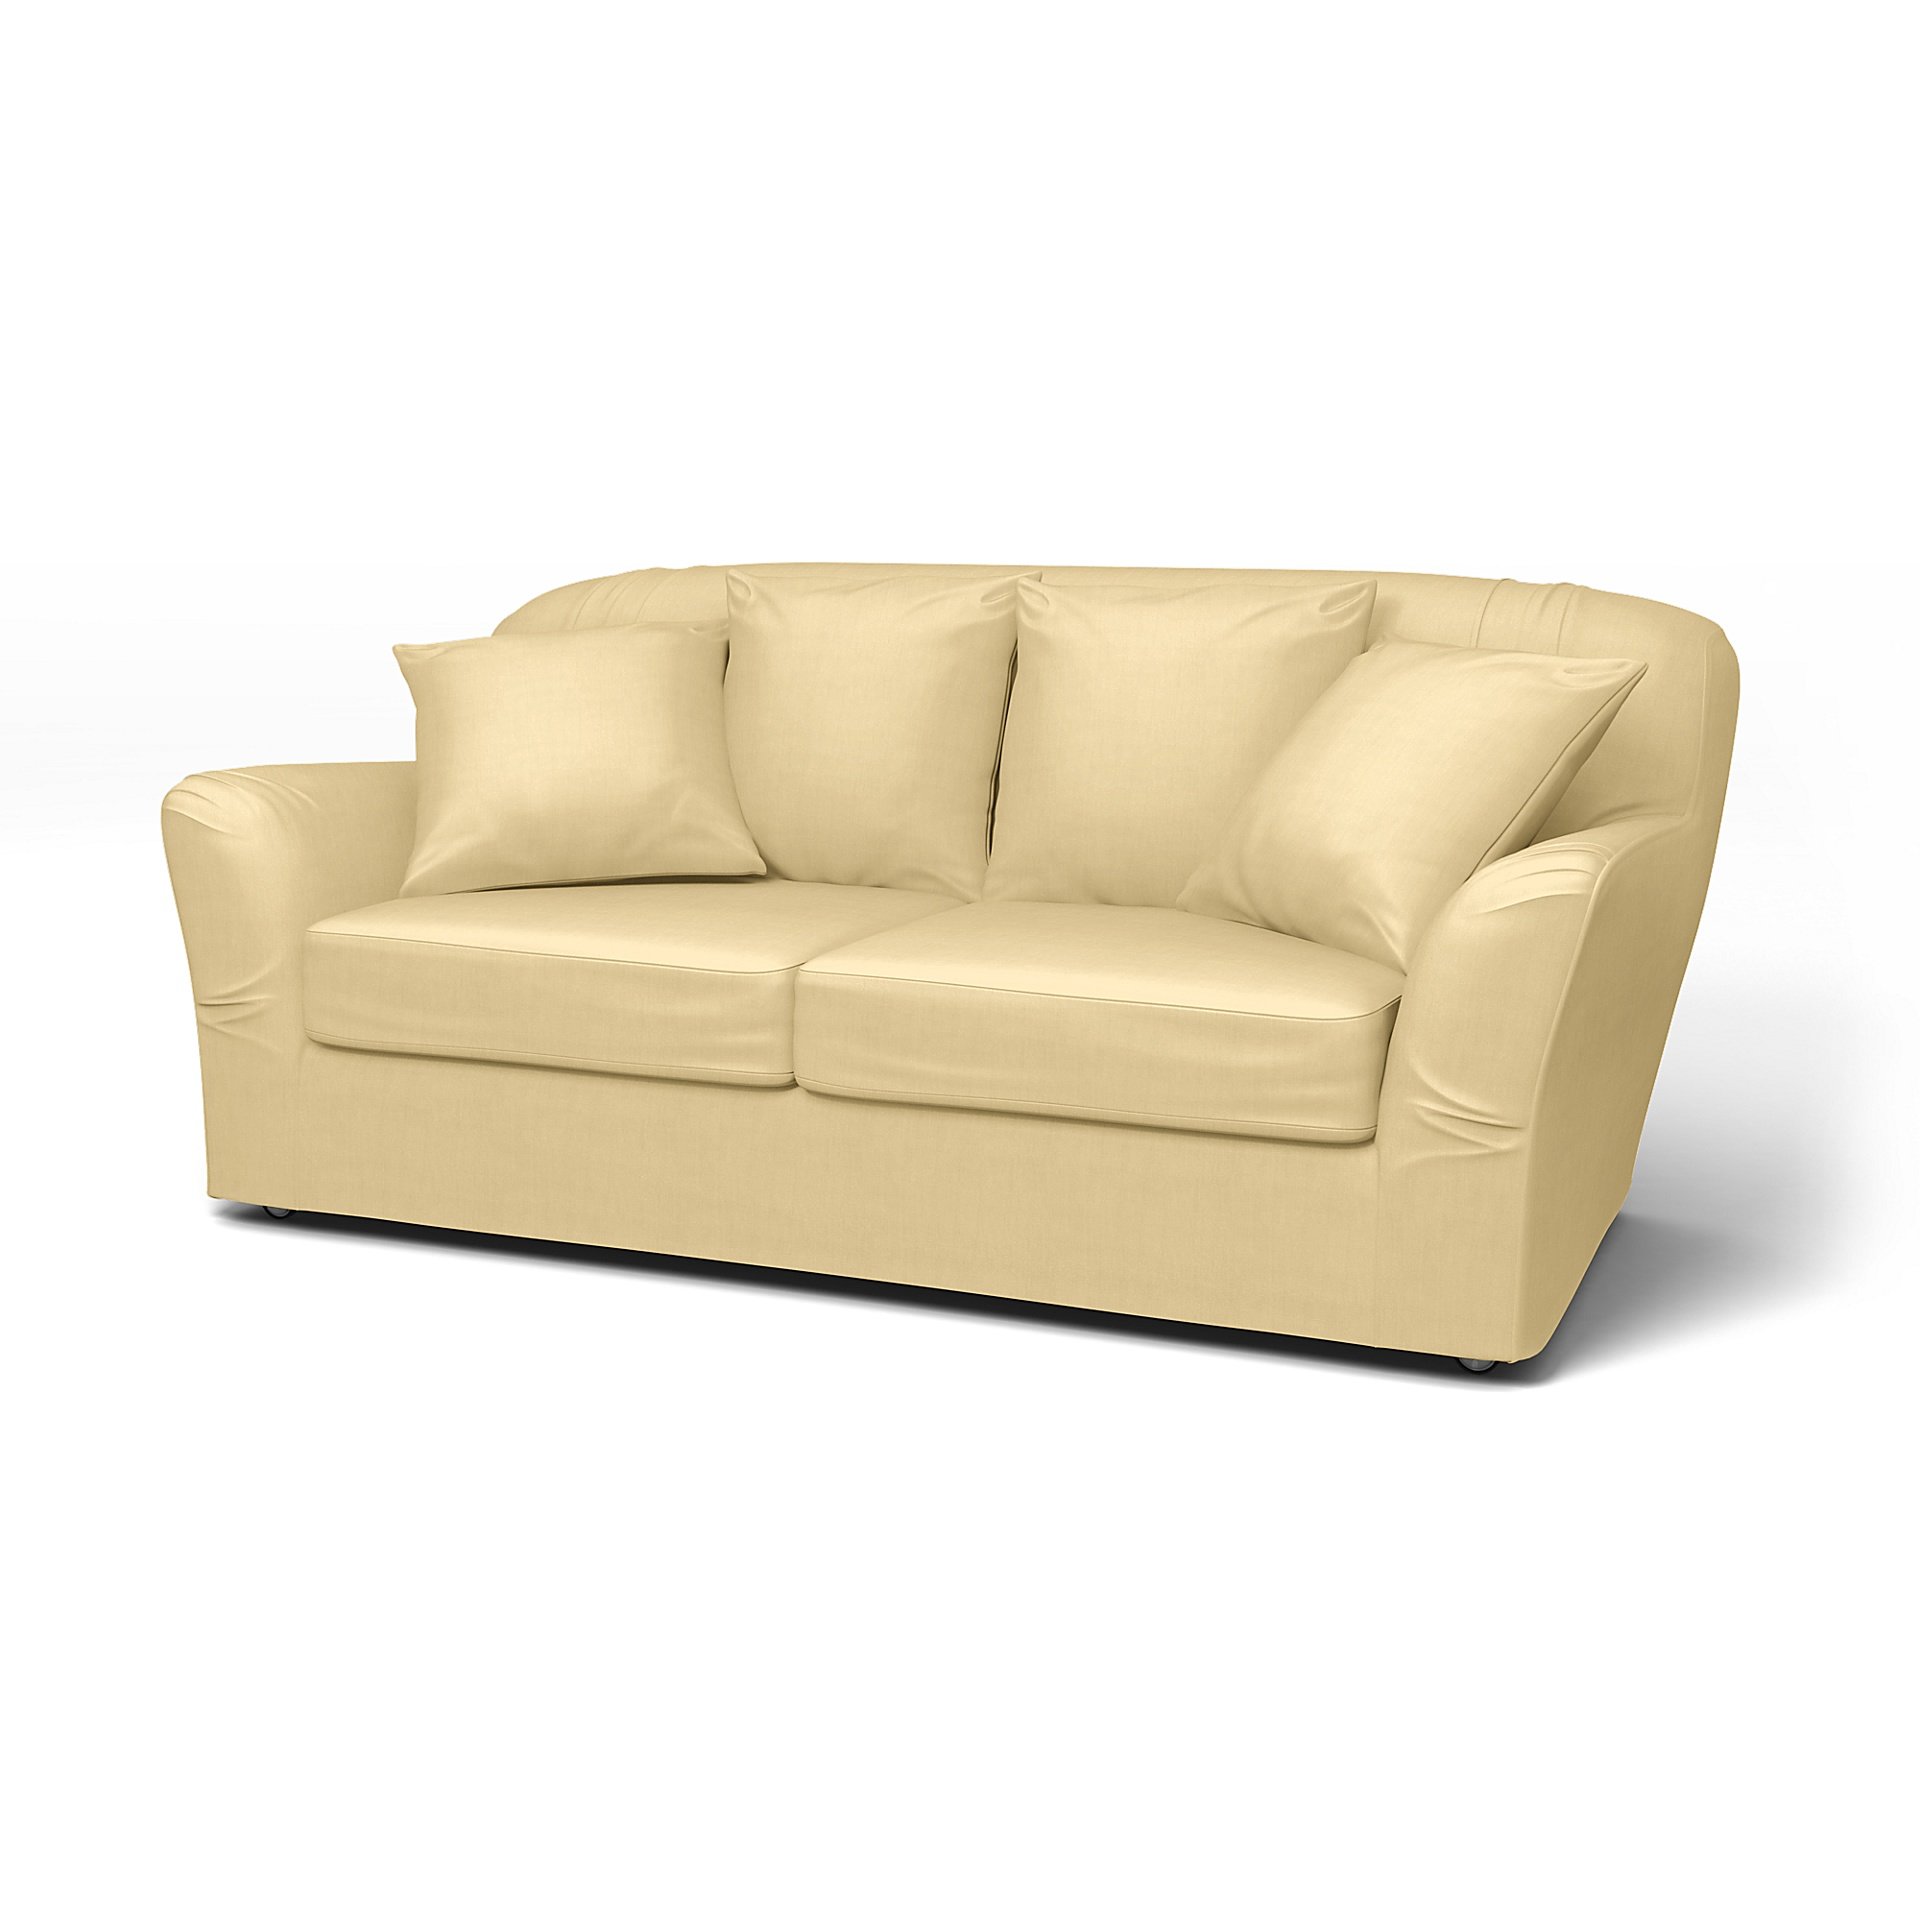 IKEA - Tomelilla 2 seater sofa, Straw Yellow, Linen - Bemz